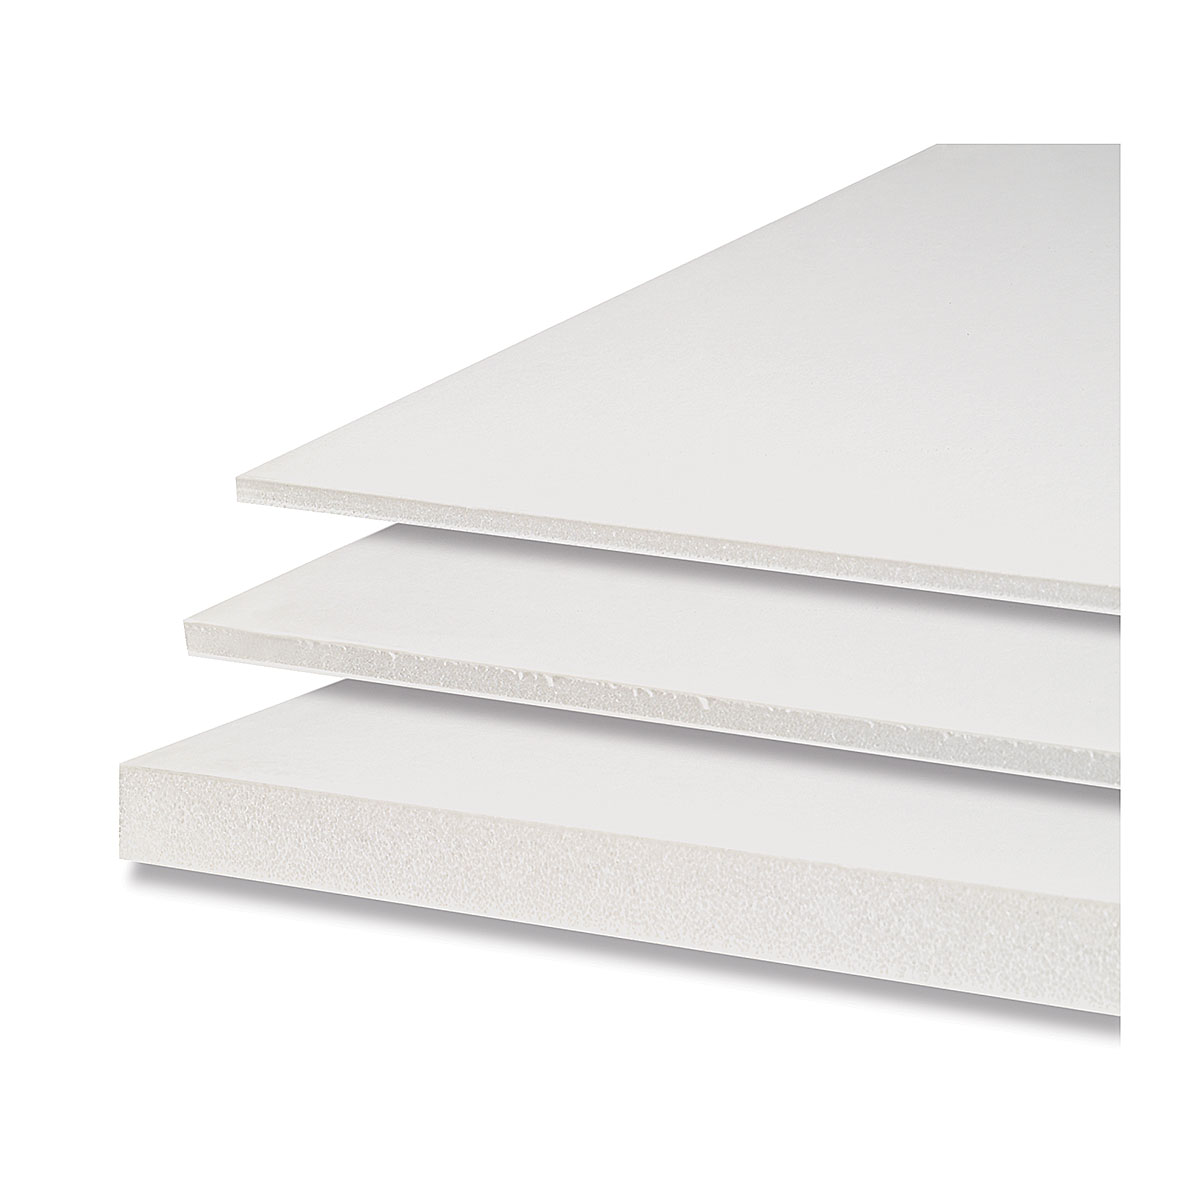 10 Boards/Carton POW Foam Board 24x36 White Surface with White Core 